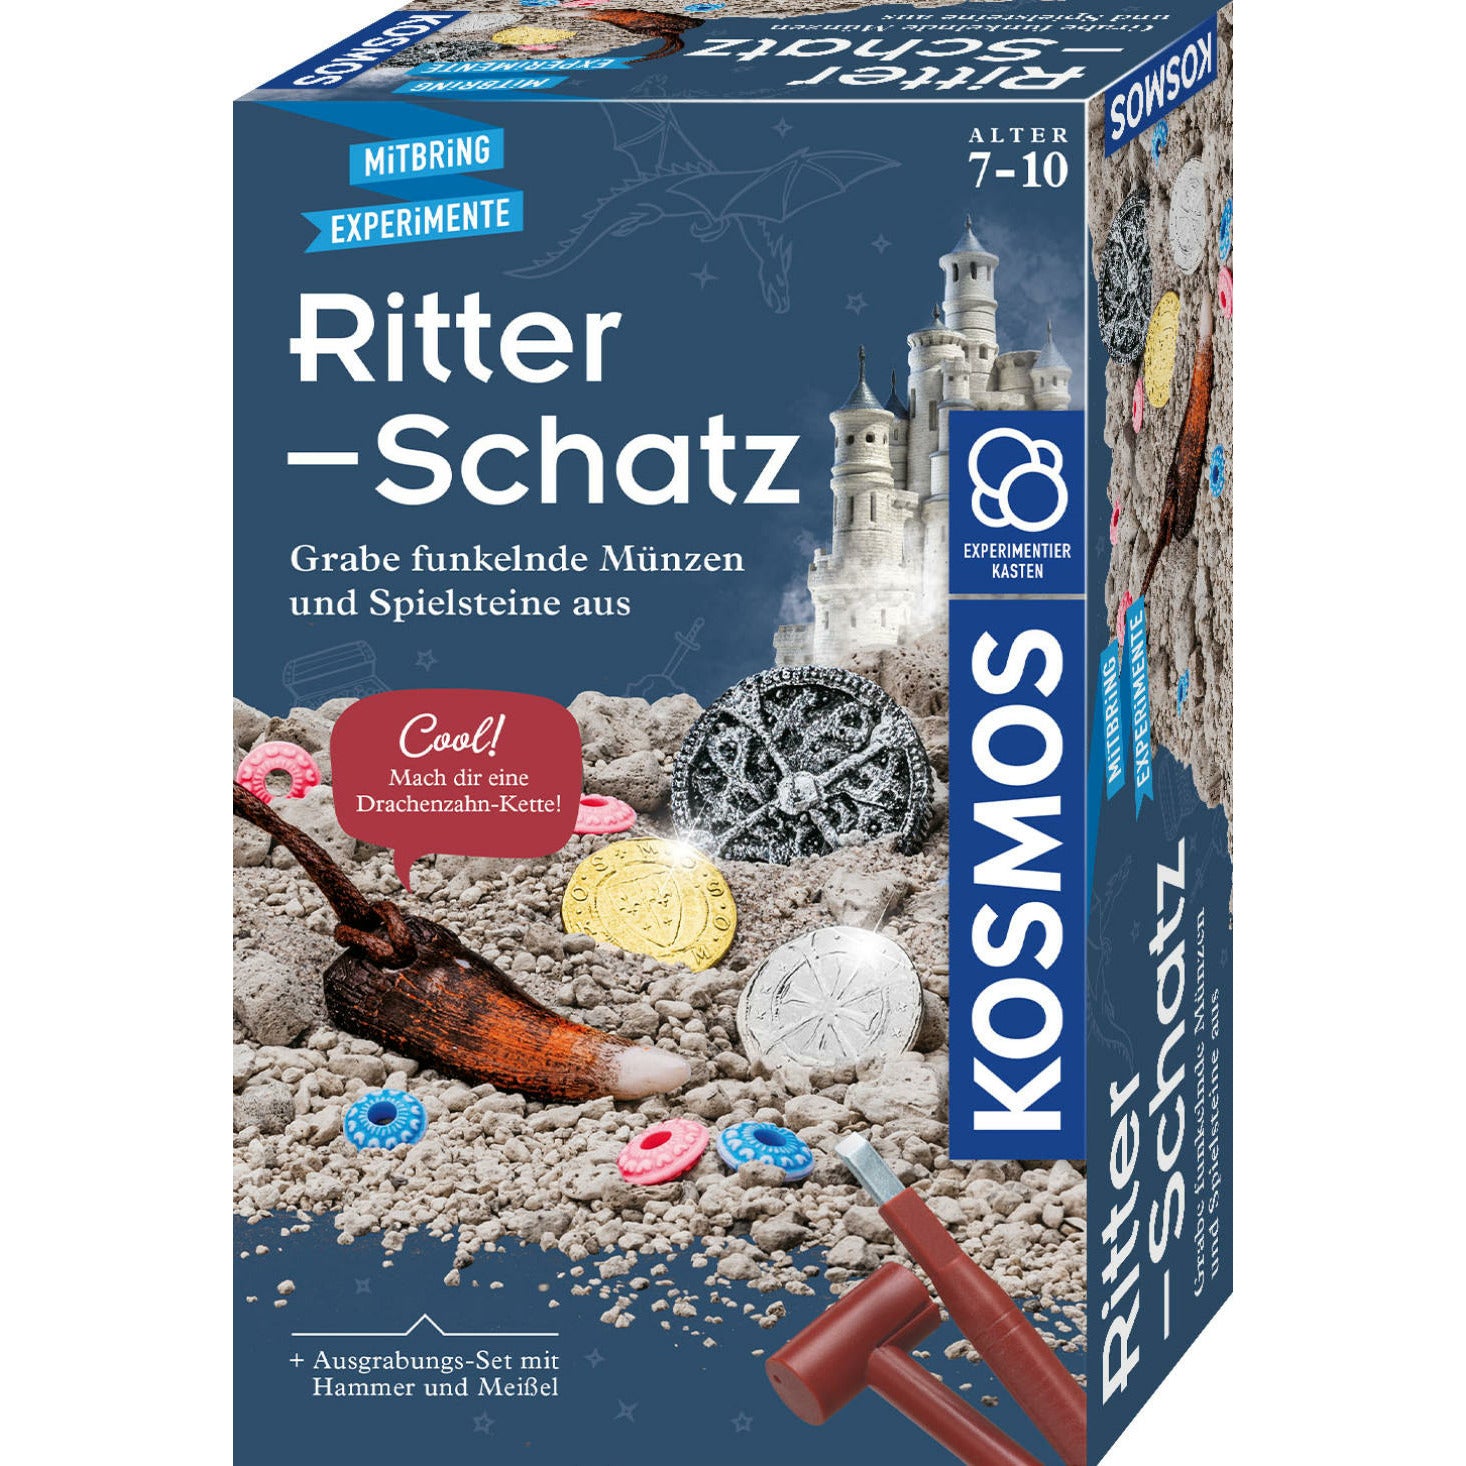 KOSMOS | Ritter-Schatz